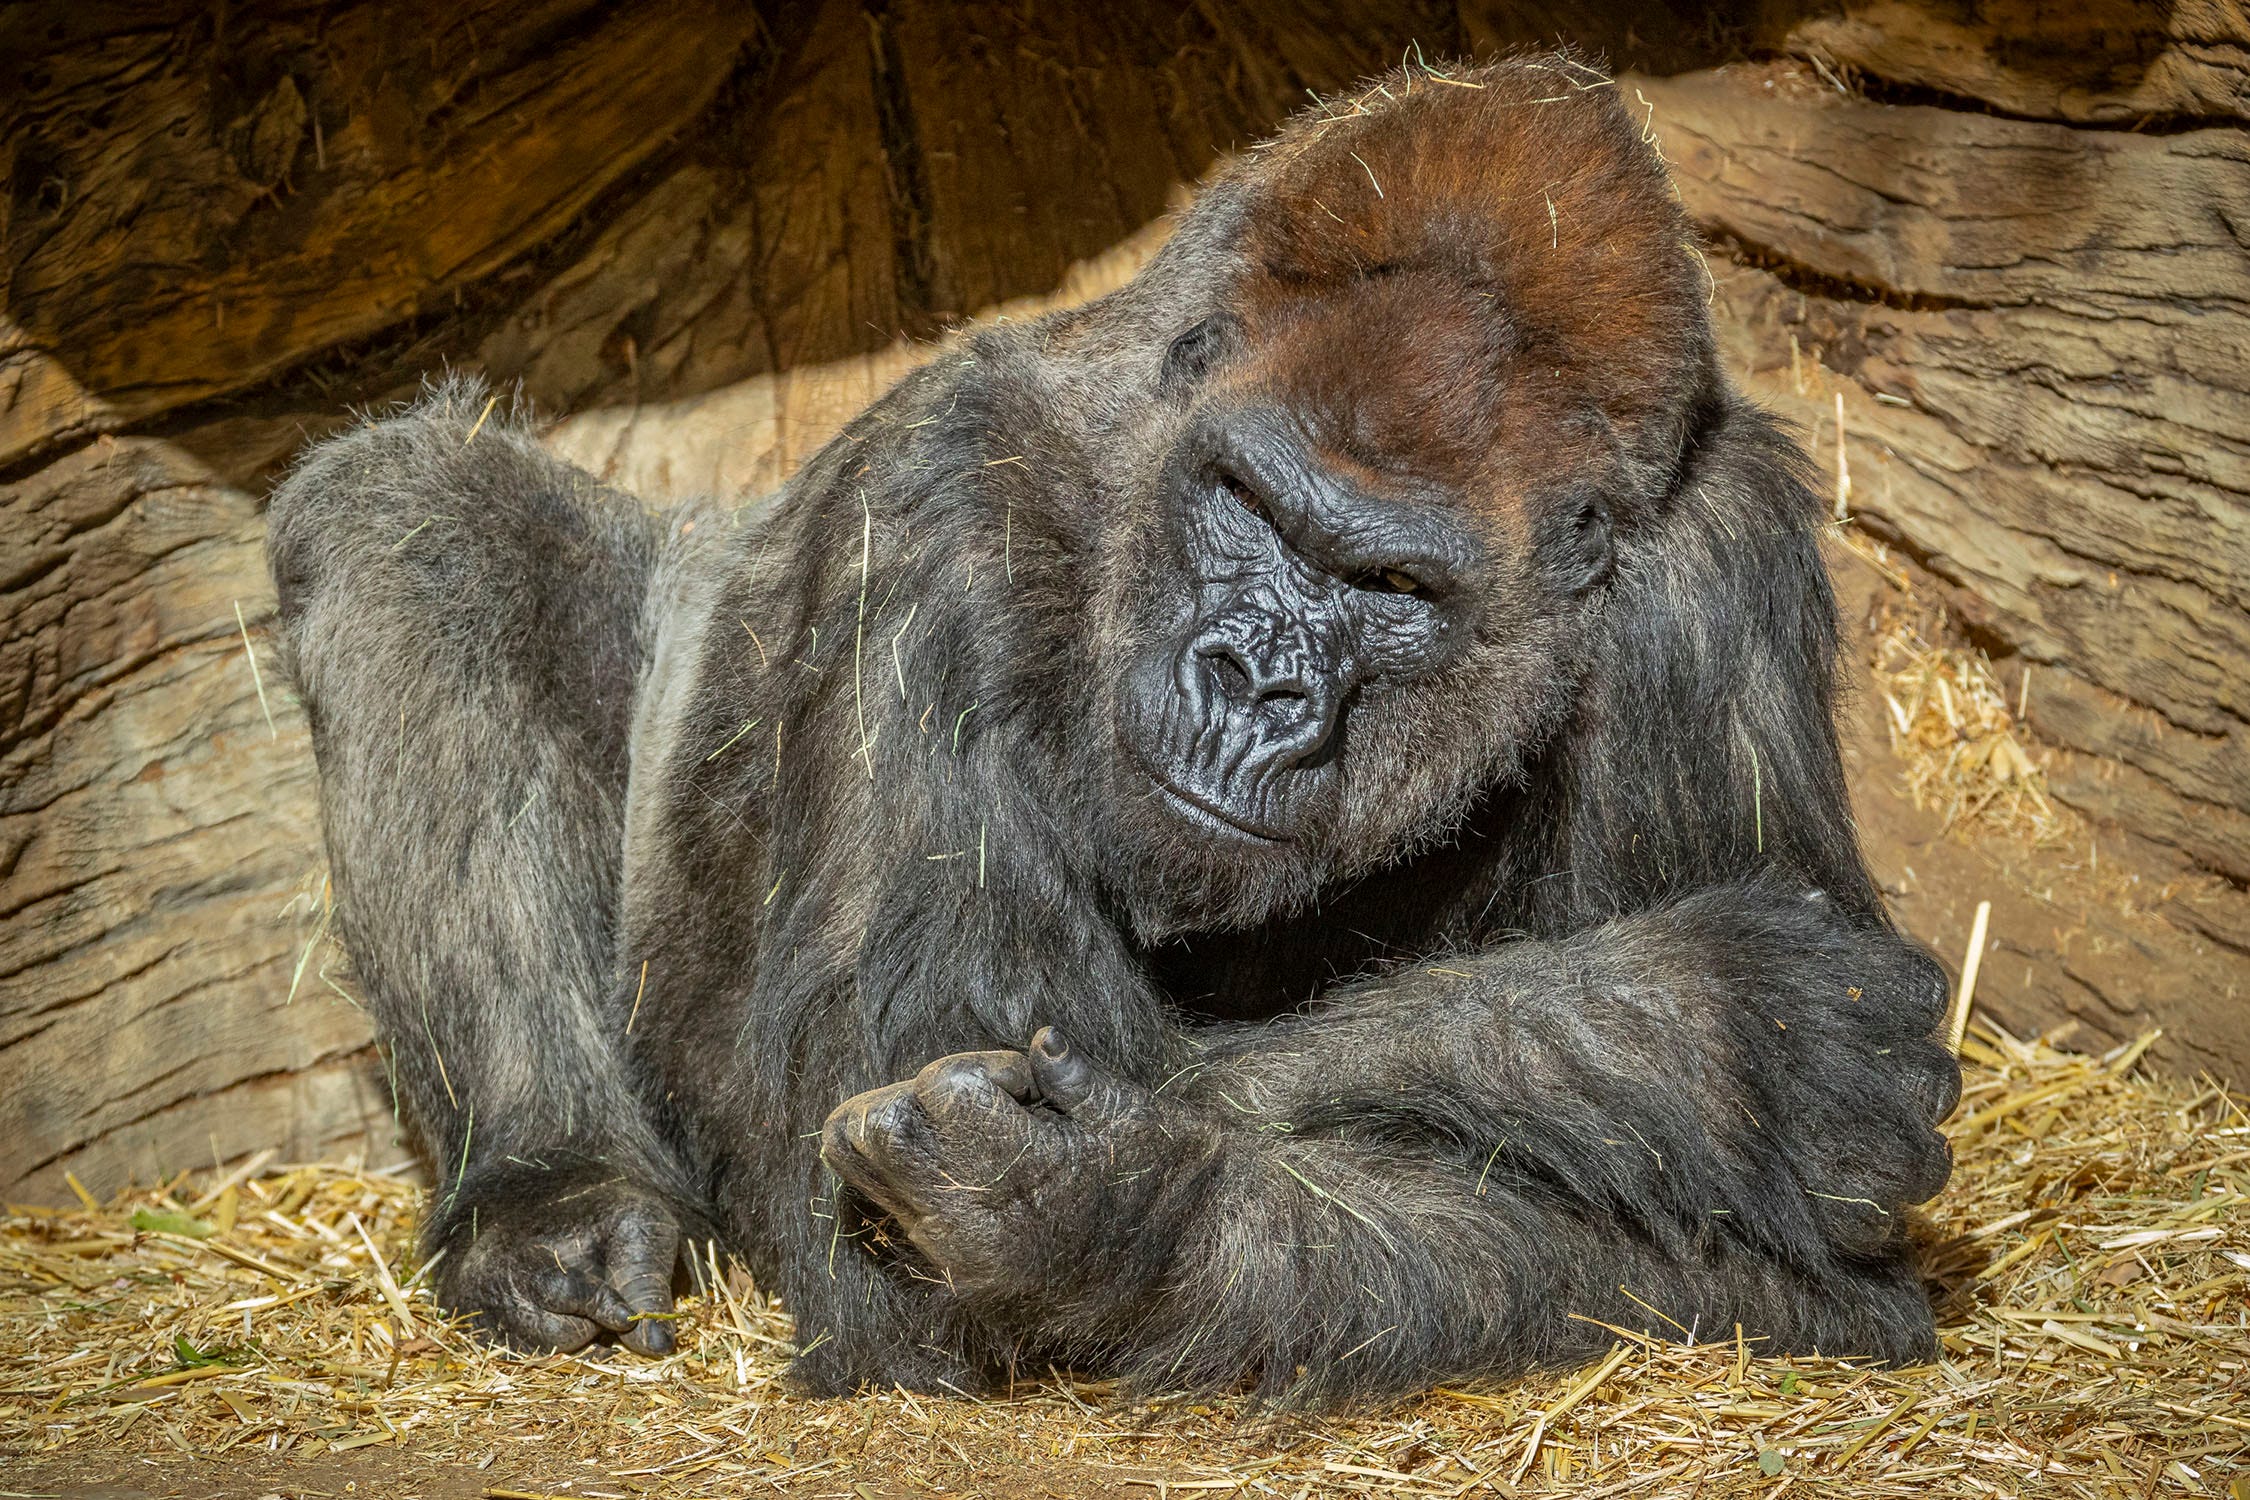 Gorillas are positive for coronavirus in San Diego Zoo Safari Park